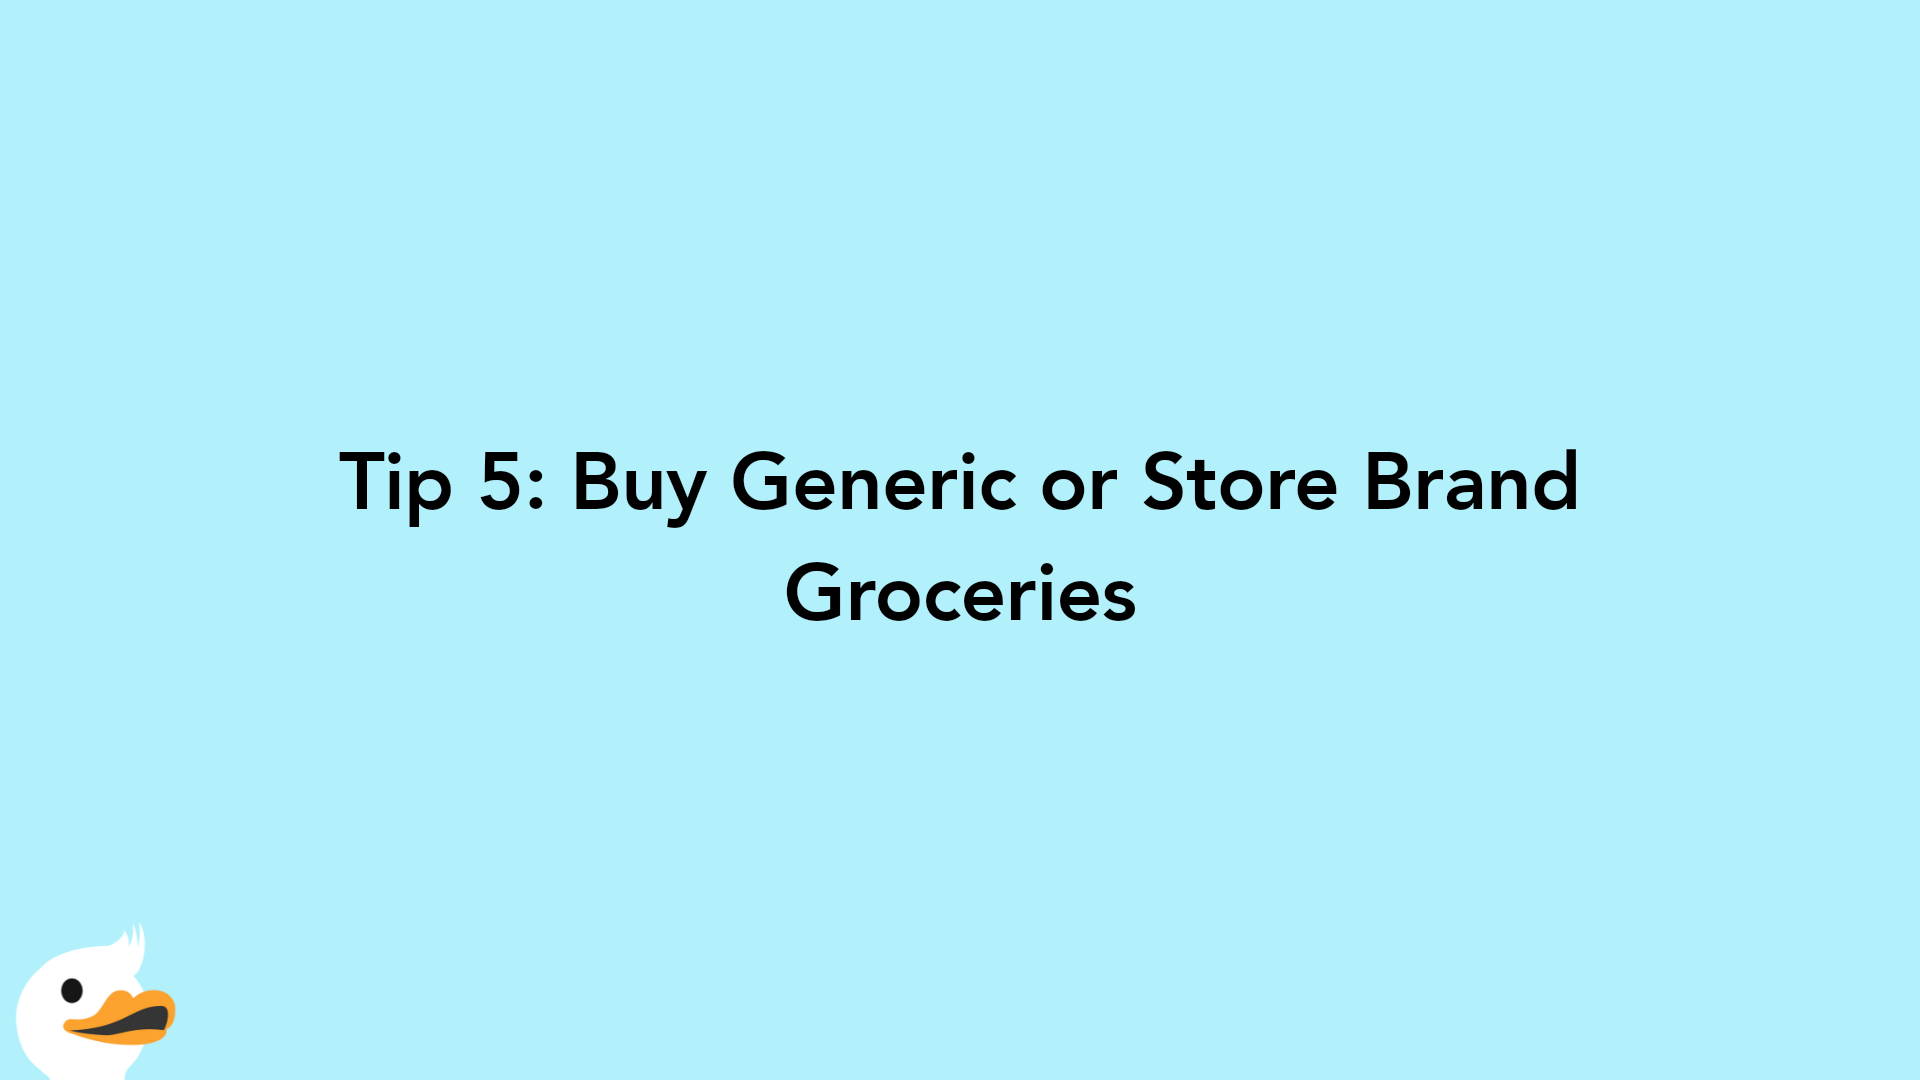 Tip 5: Buy Generic or Store Brand Groceries